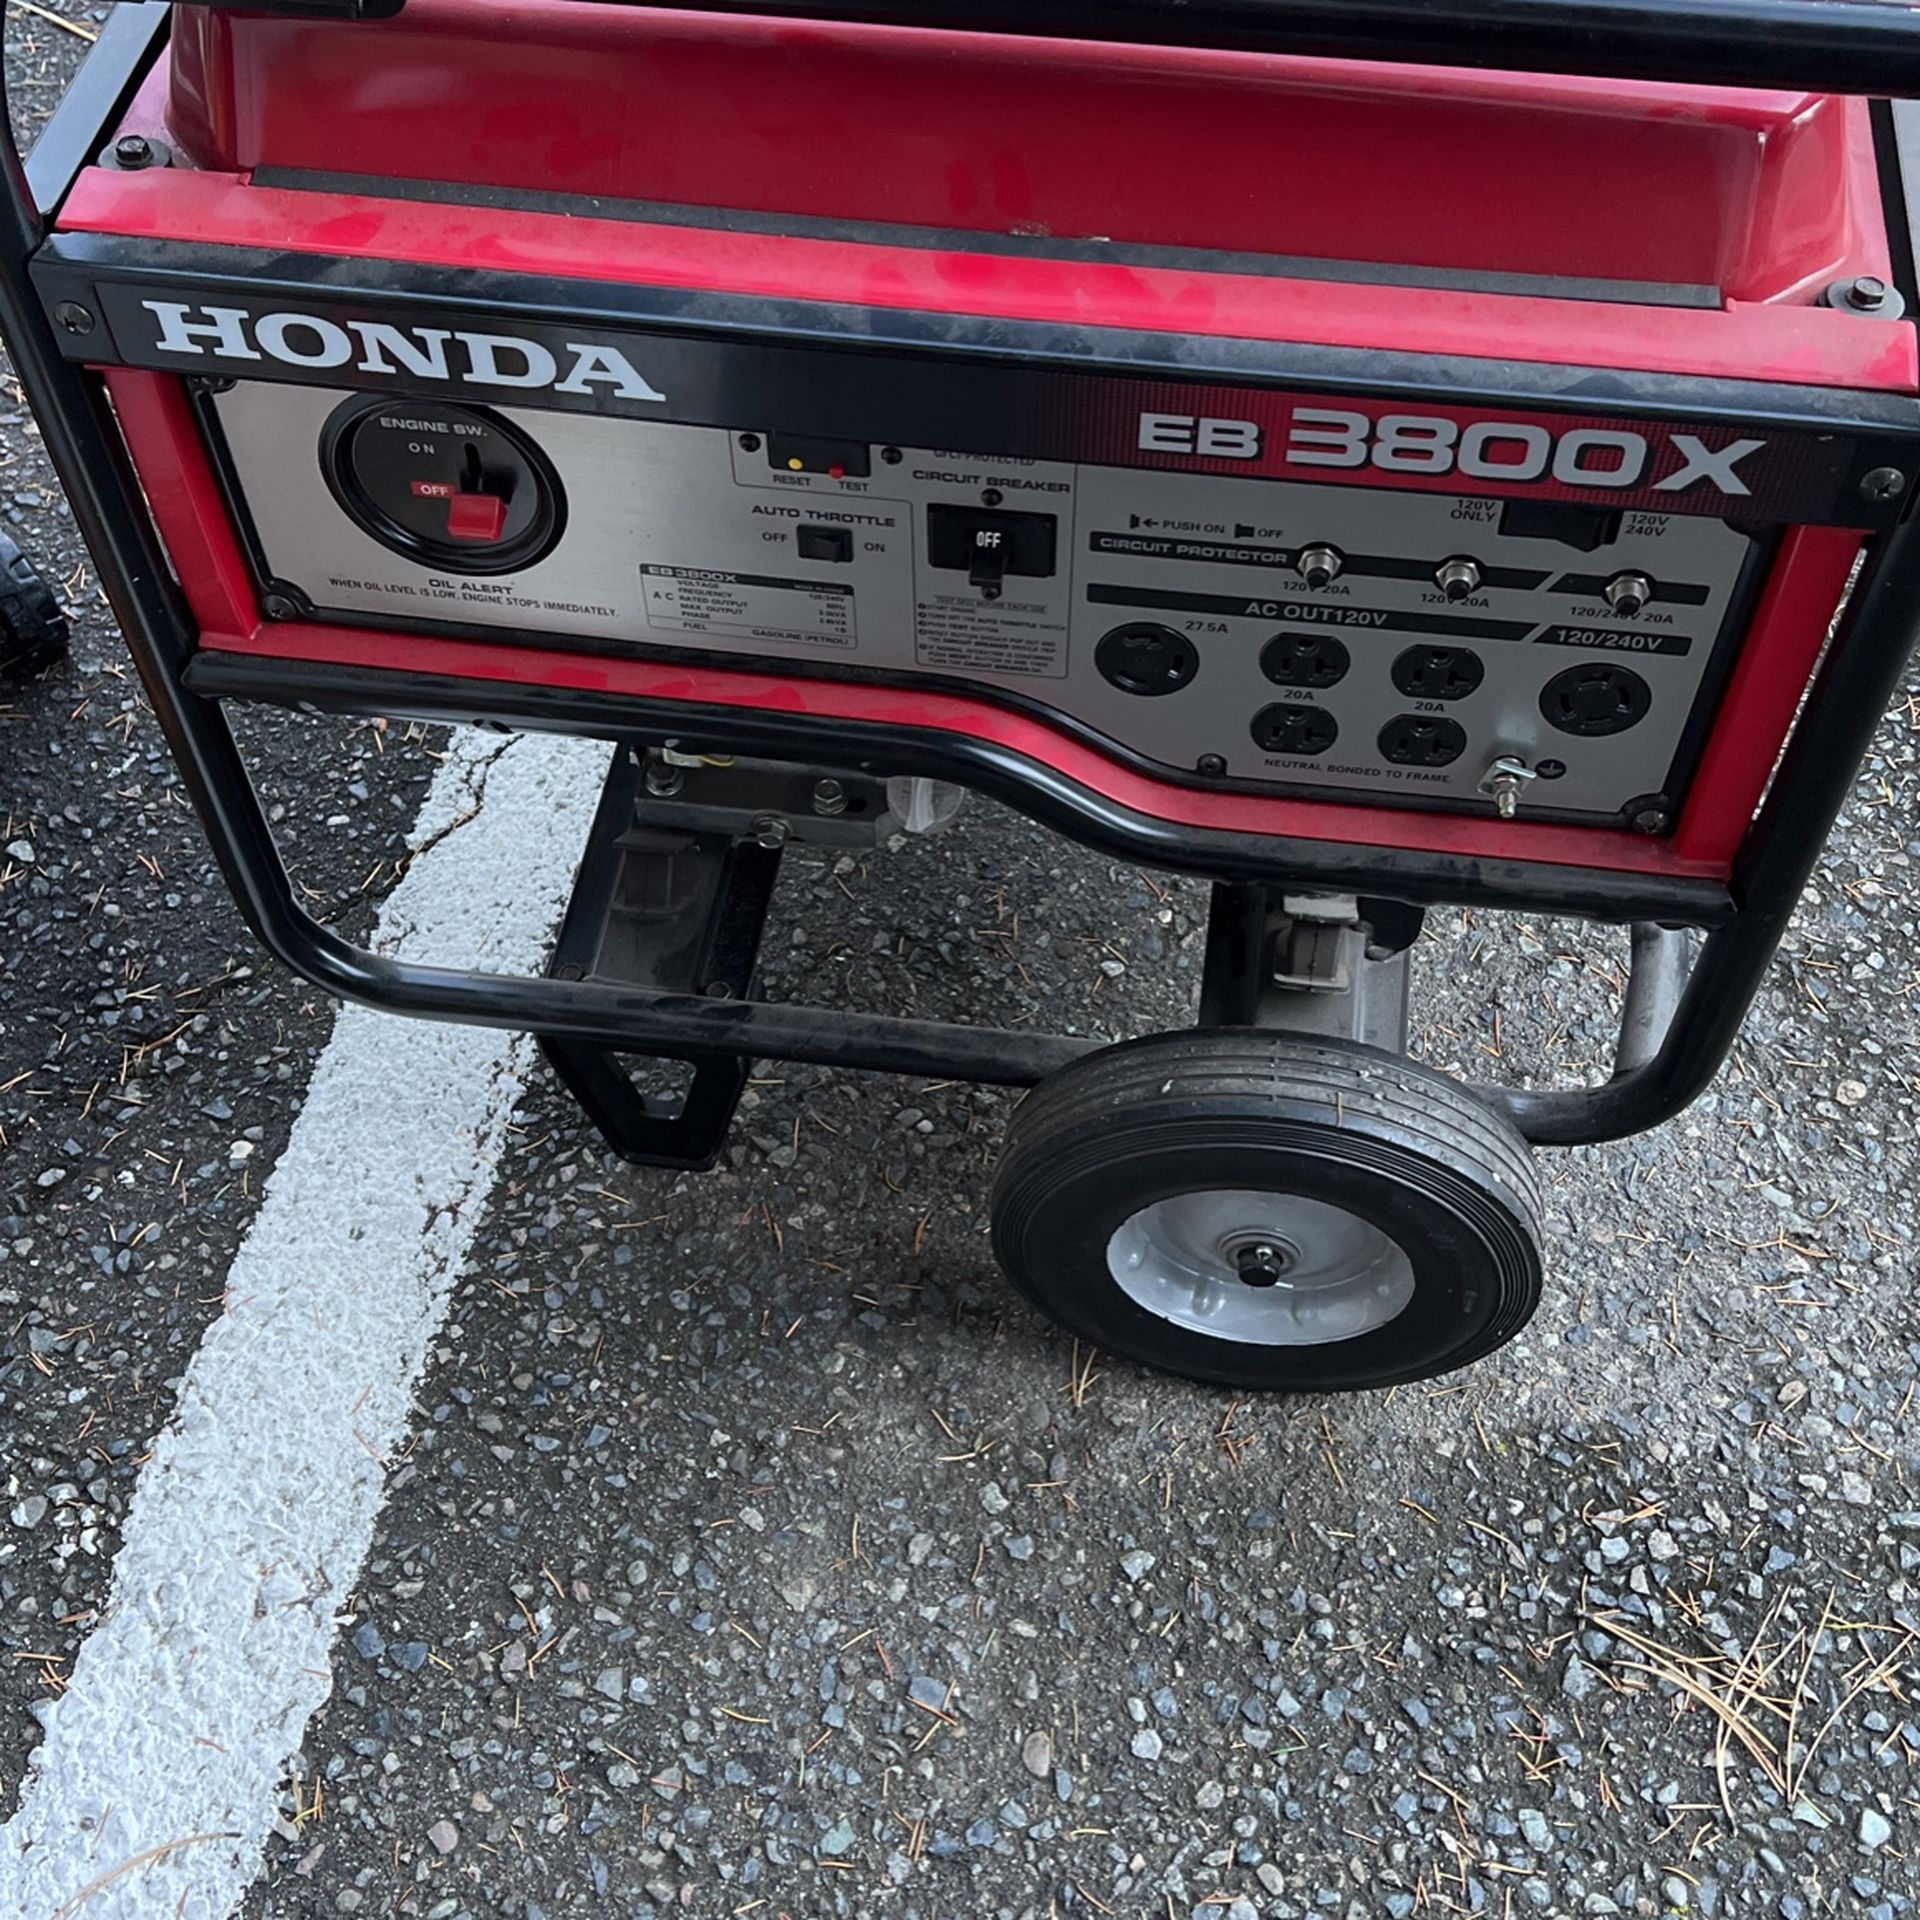 Honda Generator Eb3800x Tested Working 10-24-21